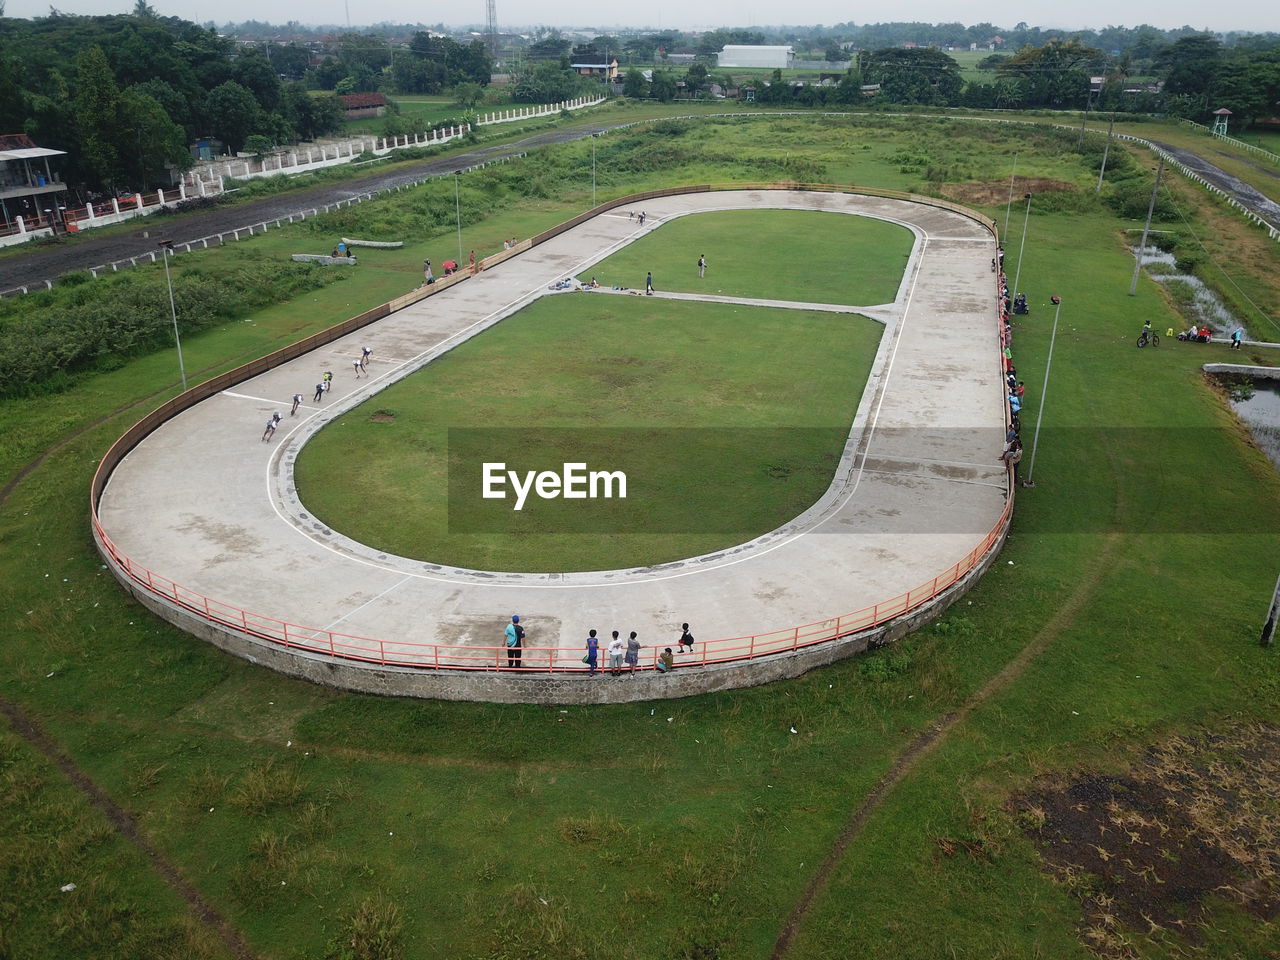 Aerial view, roller skating track in the sultan agung stadium bantul, yogyakarta, indonesia.